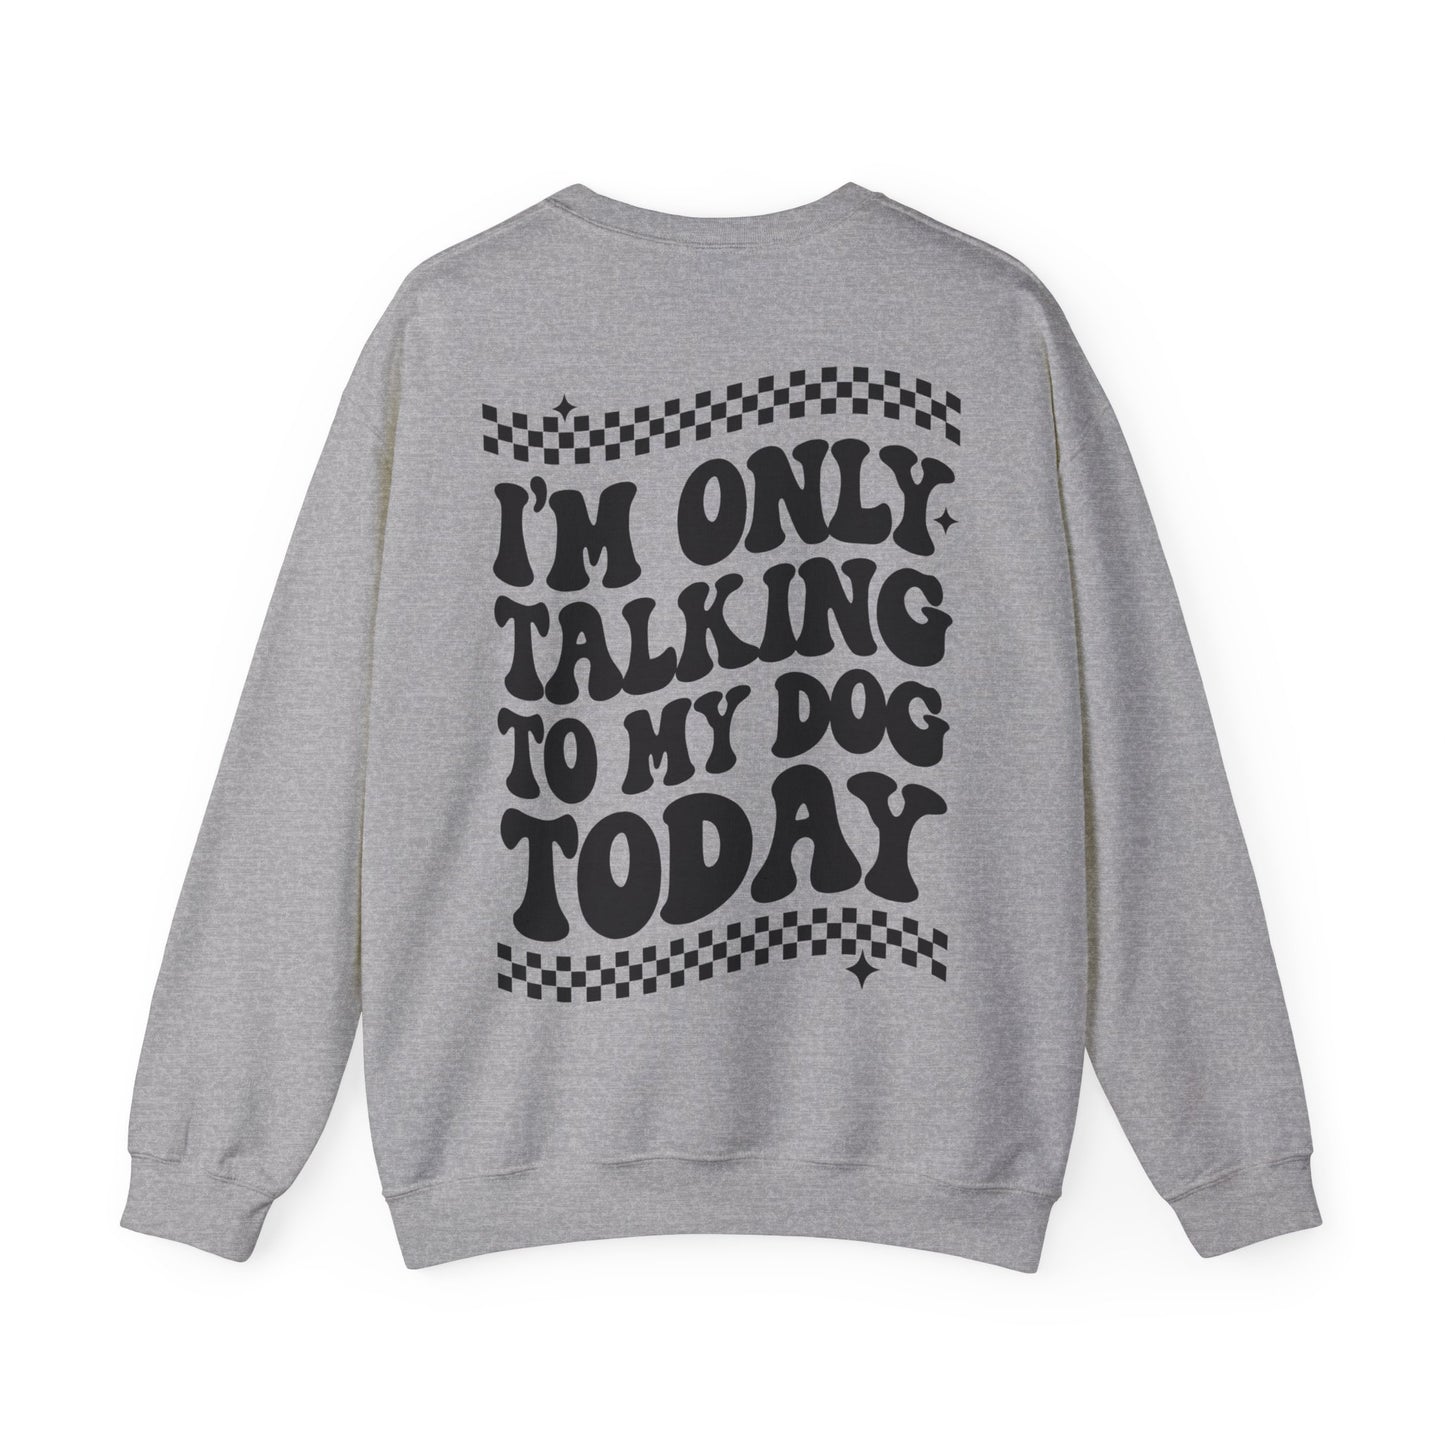 I'm only talking to my DOG - Crewneck Sweatshirt